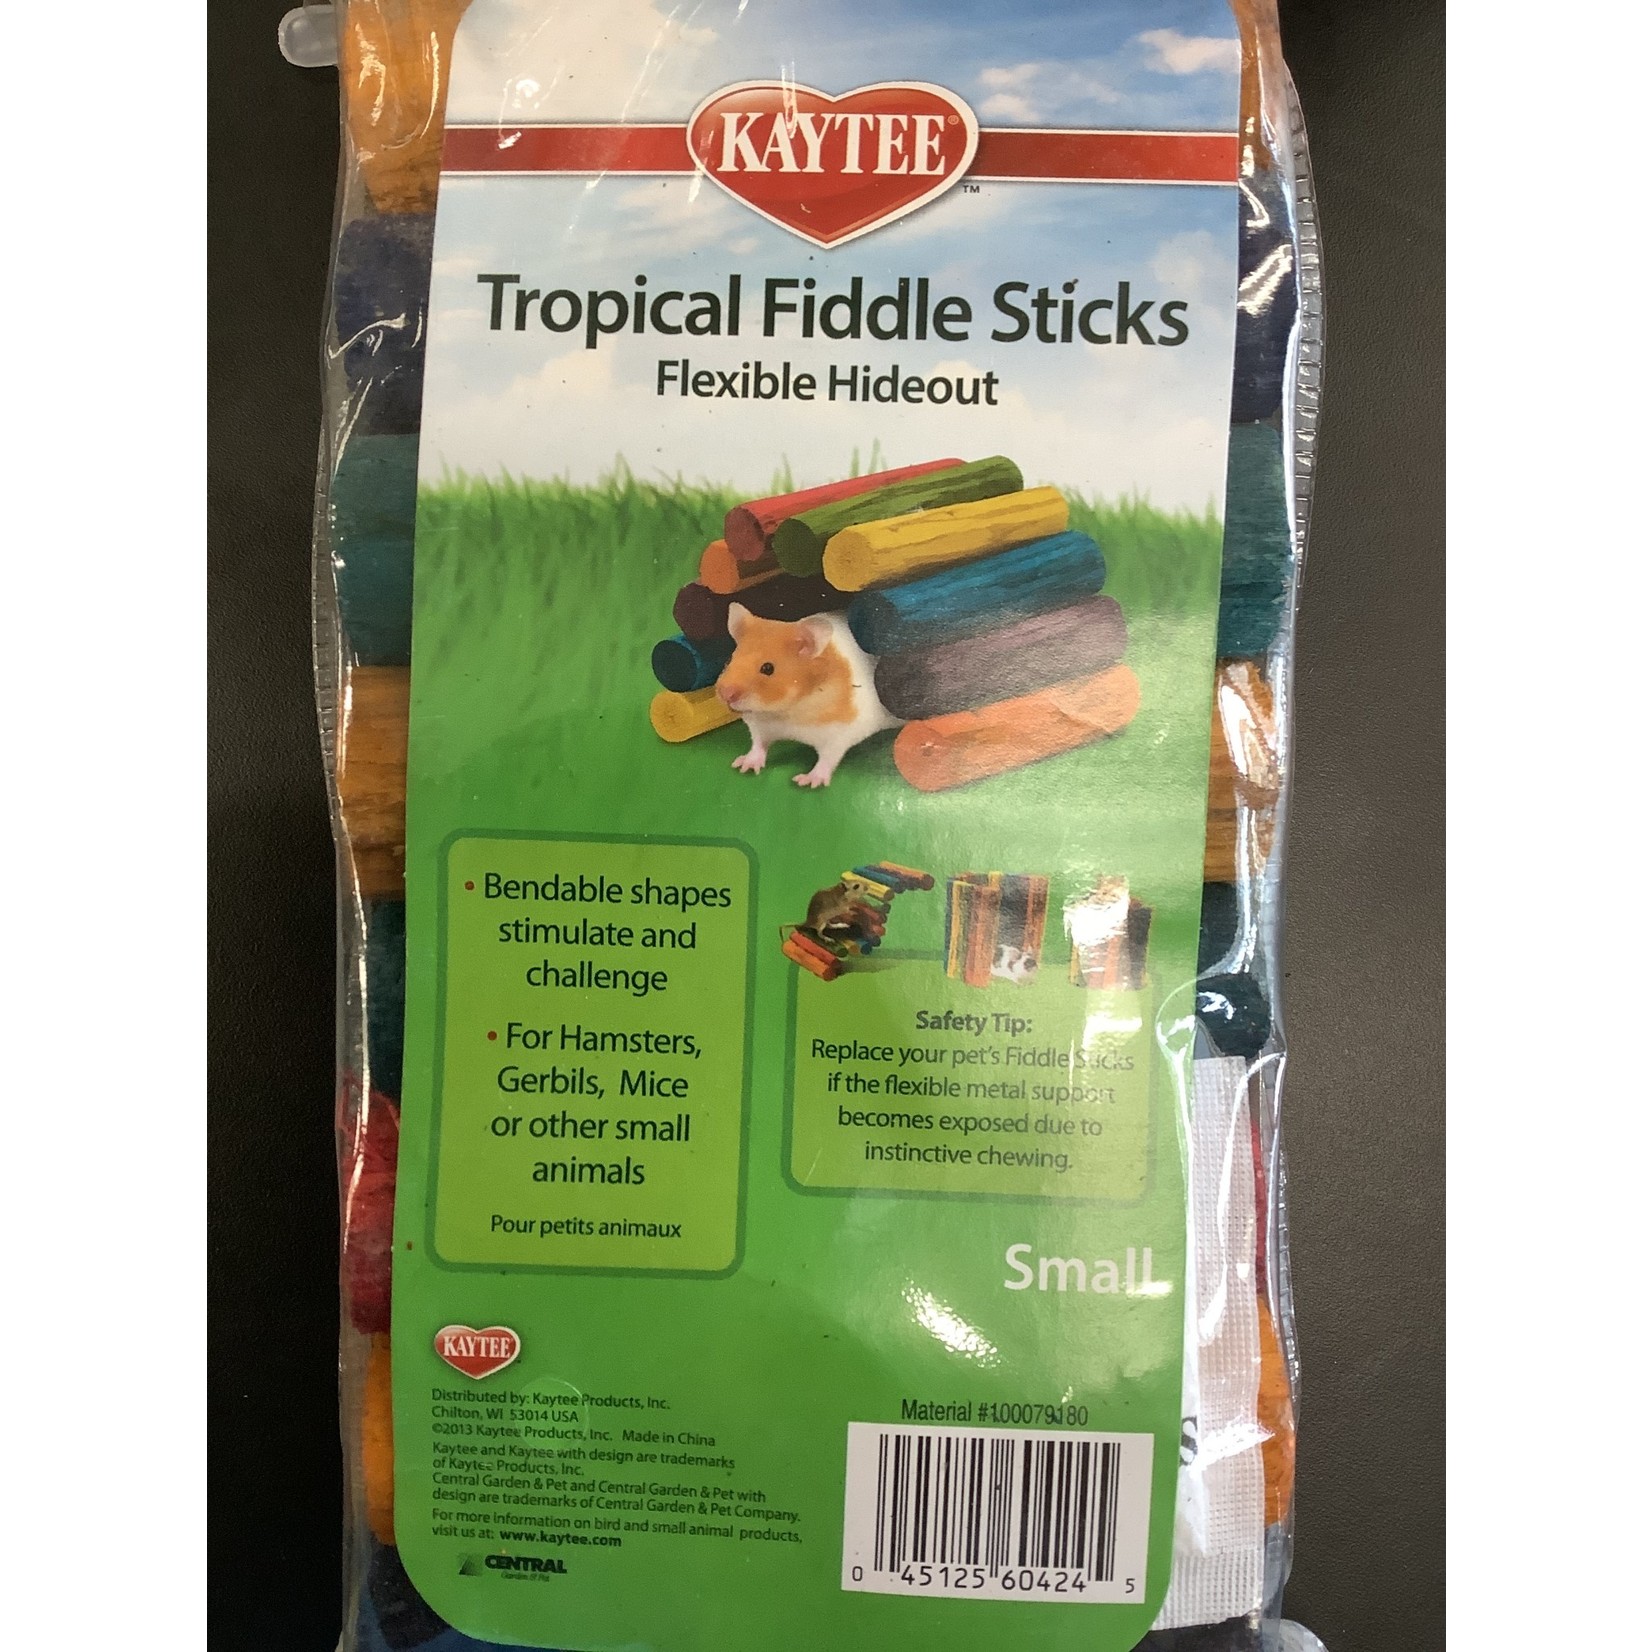 KAYTEE KAYTEE. Tropical Fiddle Sticks, flexible hideout. Small